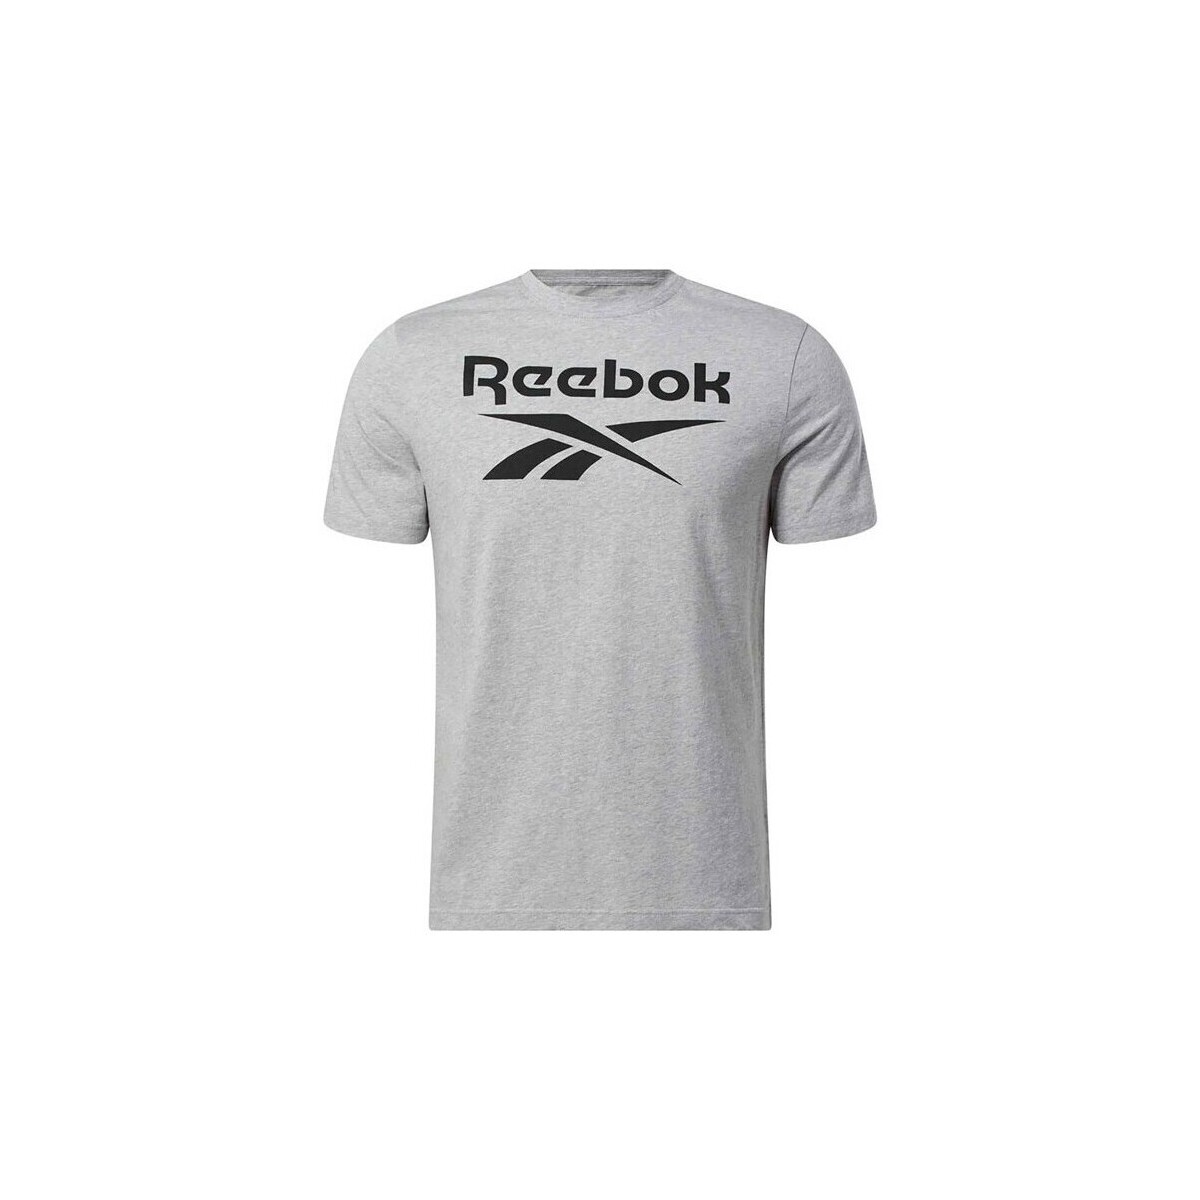 textil Hombre Camisetas manga corta Reebok Sport STACKED LOGO Gris